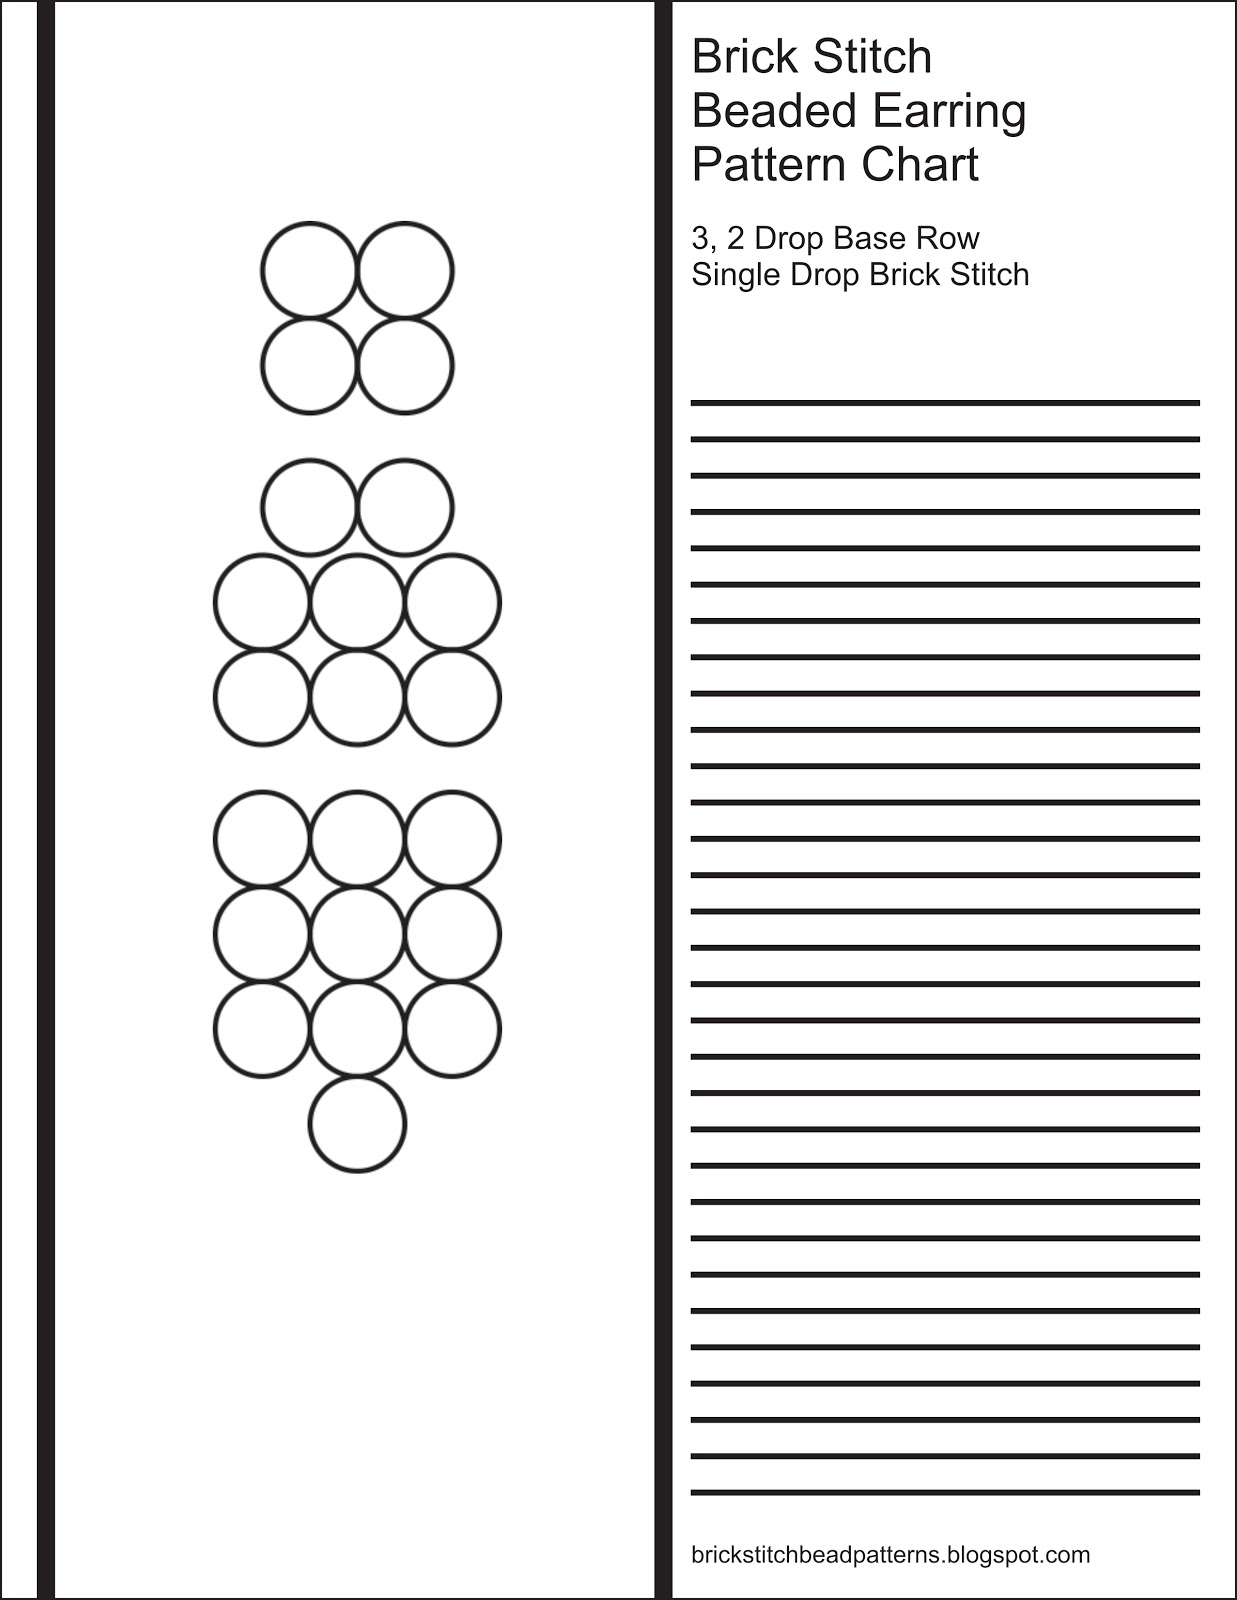 brick-stitch-bead-patterns-journal-blank-beaded-earring-pattern-chart